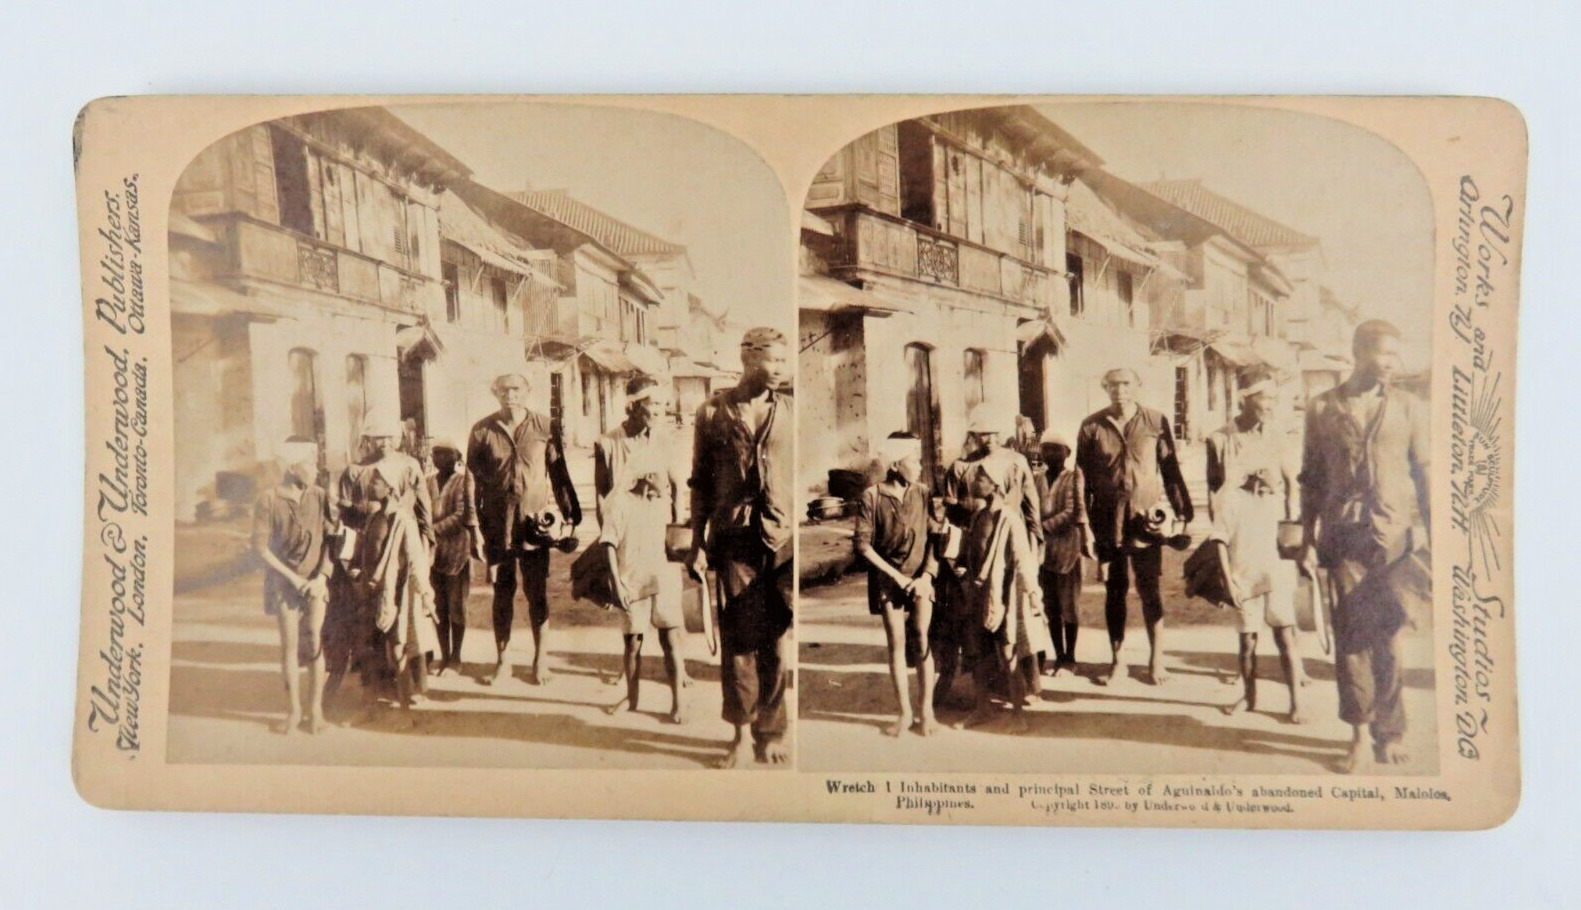 Wretch 1 Inhabitants Aguinaldo\'s Capital Malolos Philippines 1899 Stereoscopic